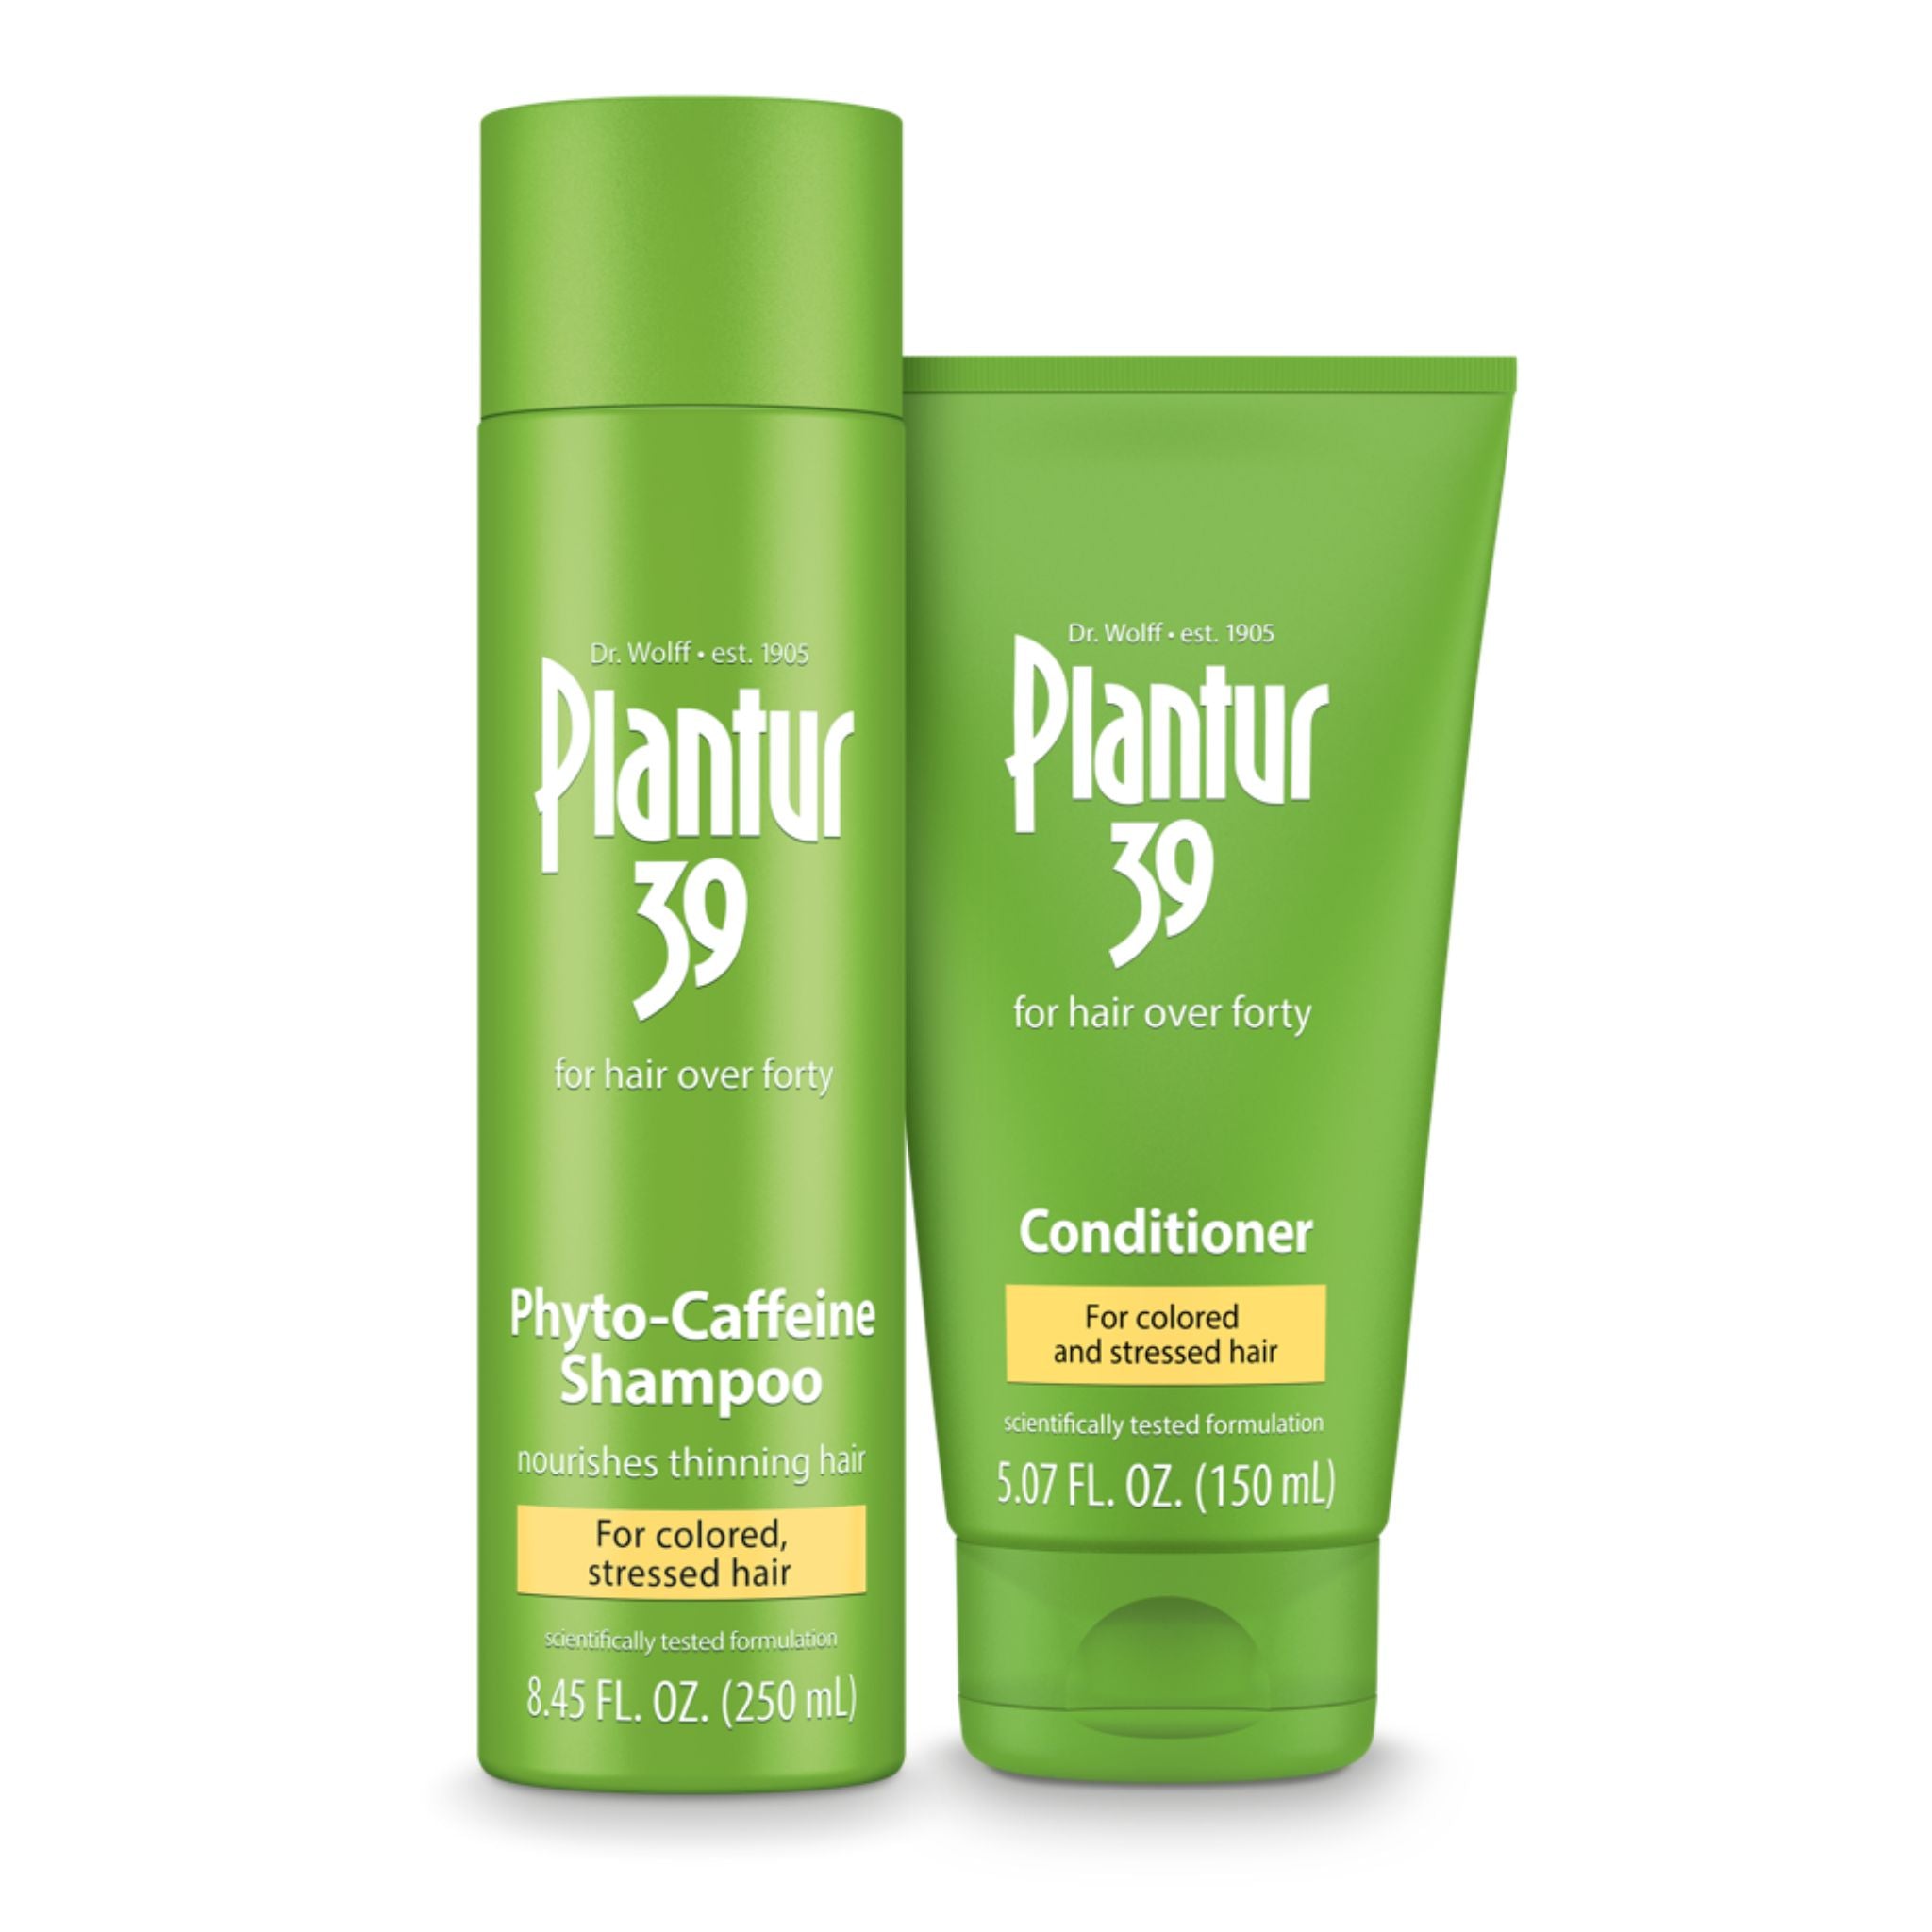 Plantur 39 Phyto-Caffeine Shampoo + Conditioner for Colored Hair